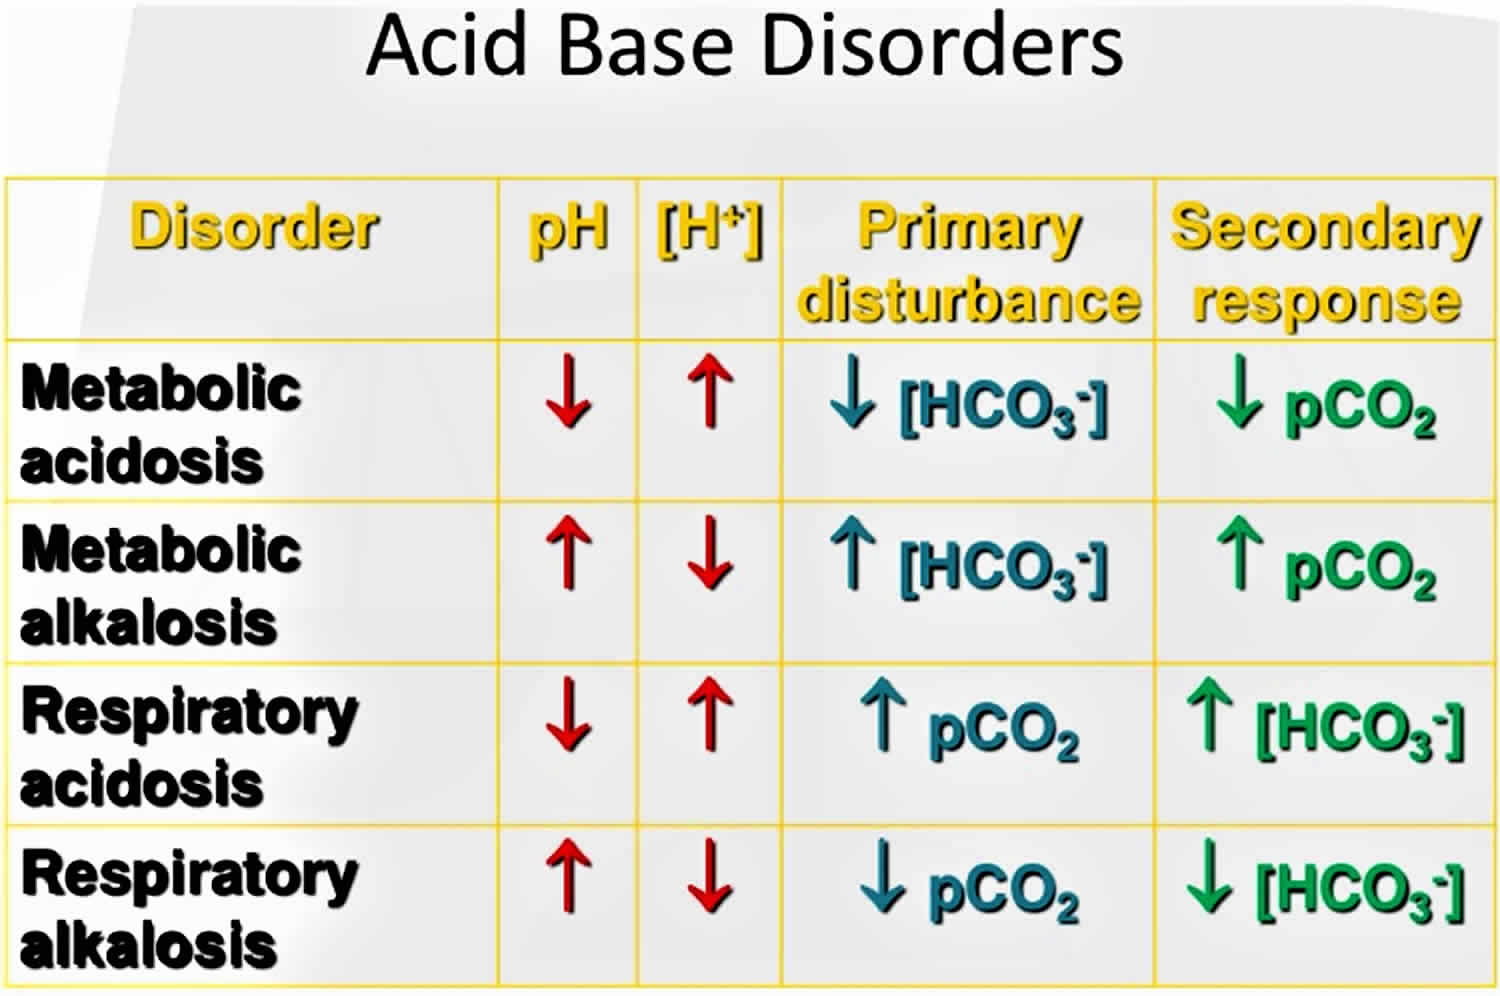 acid-base disorders